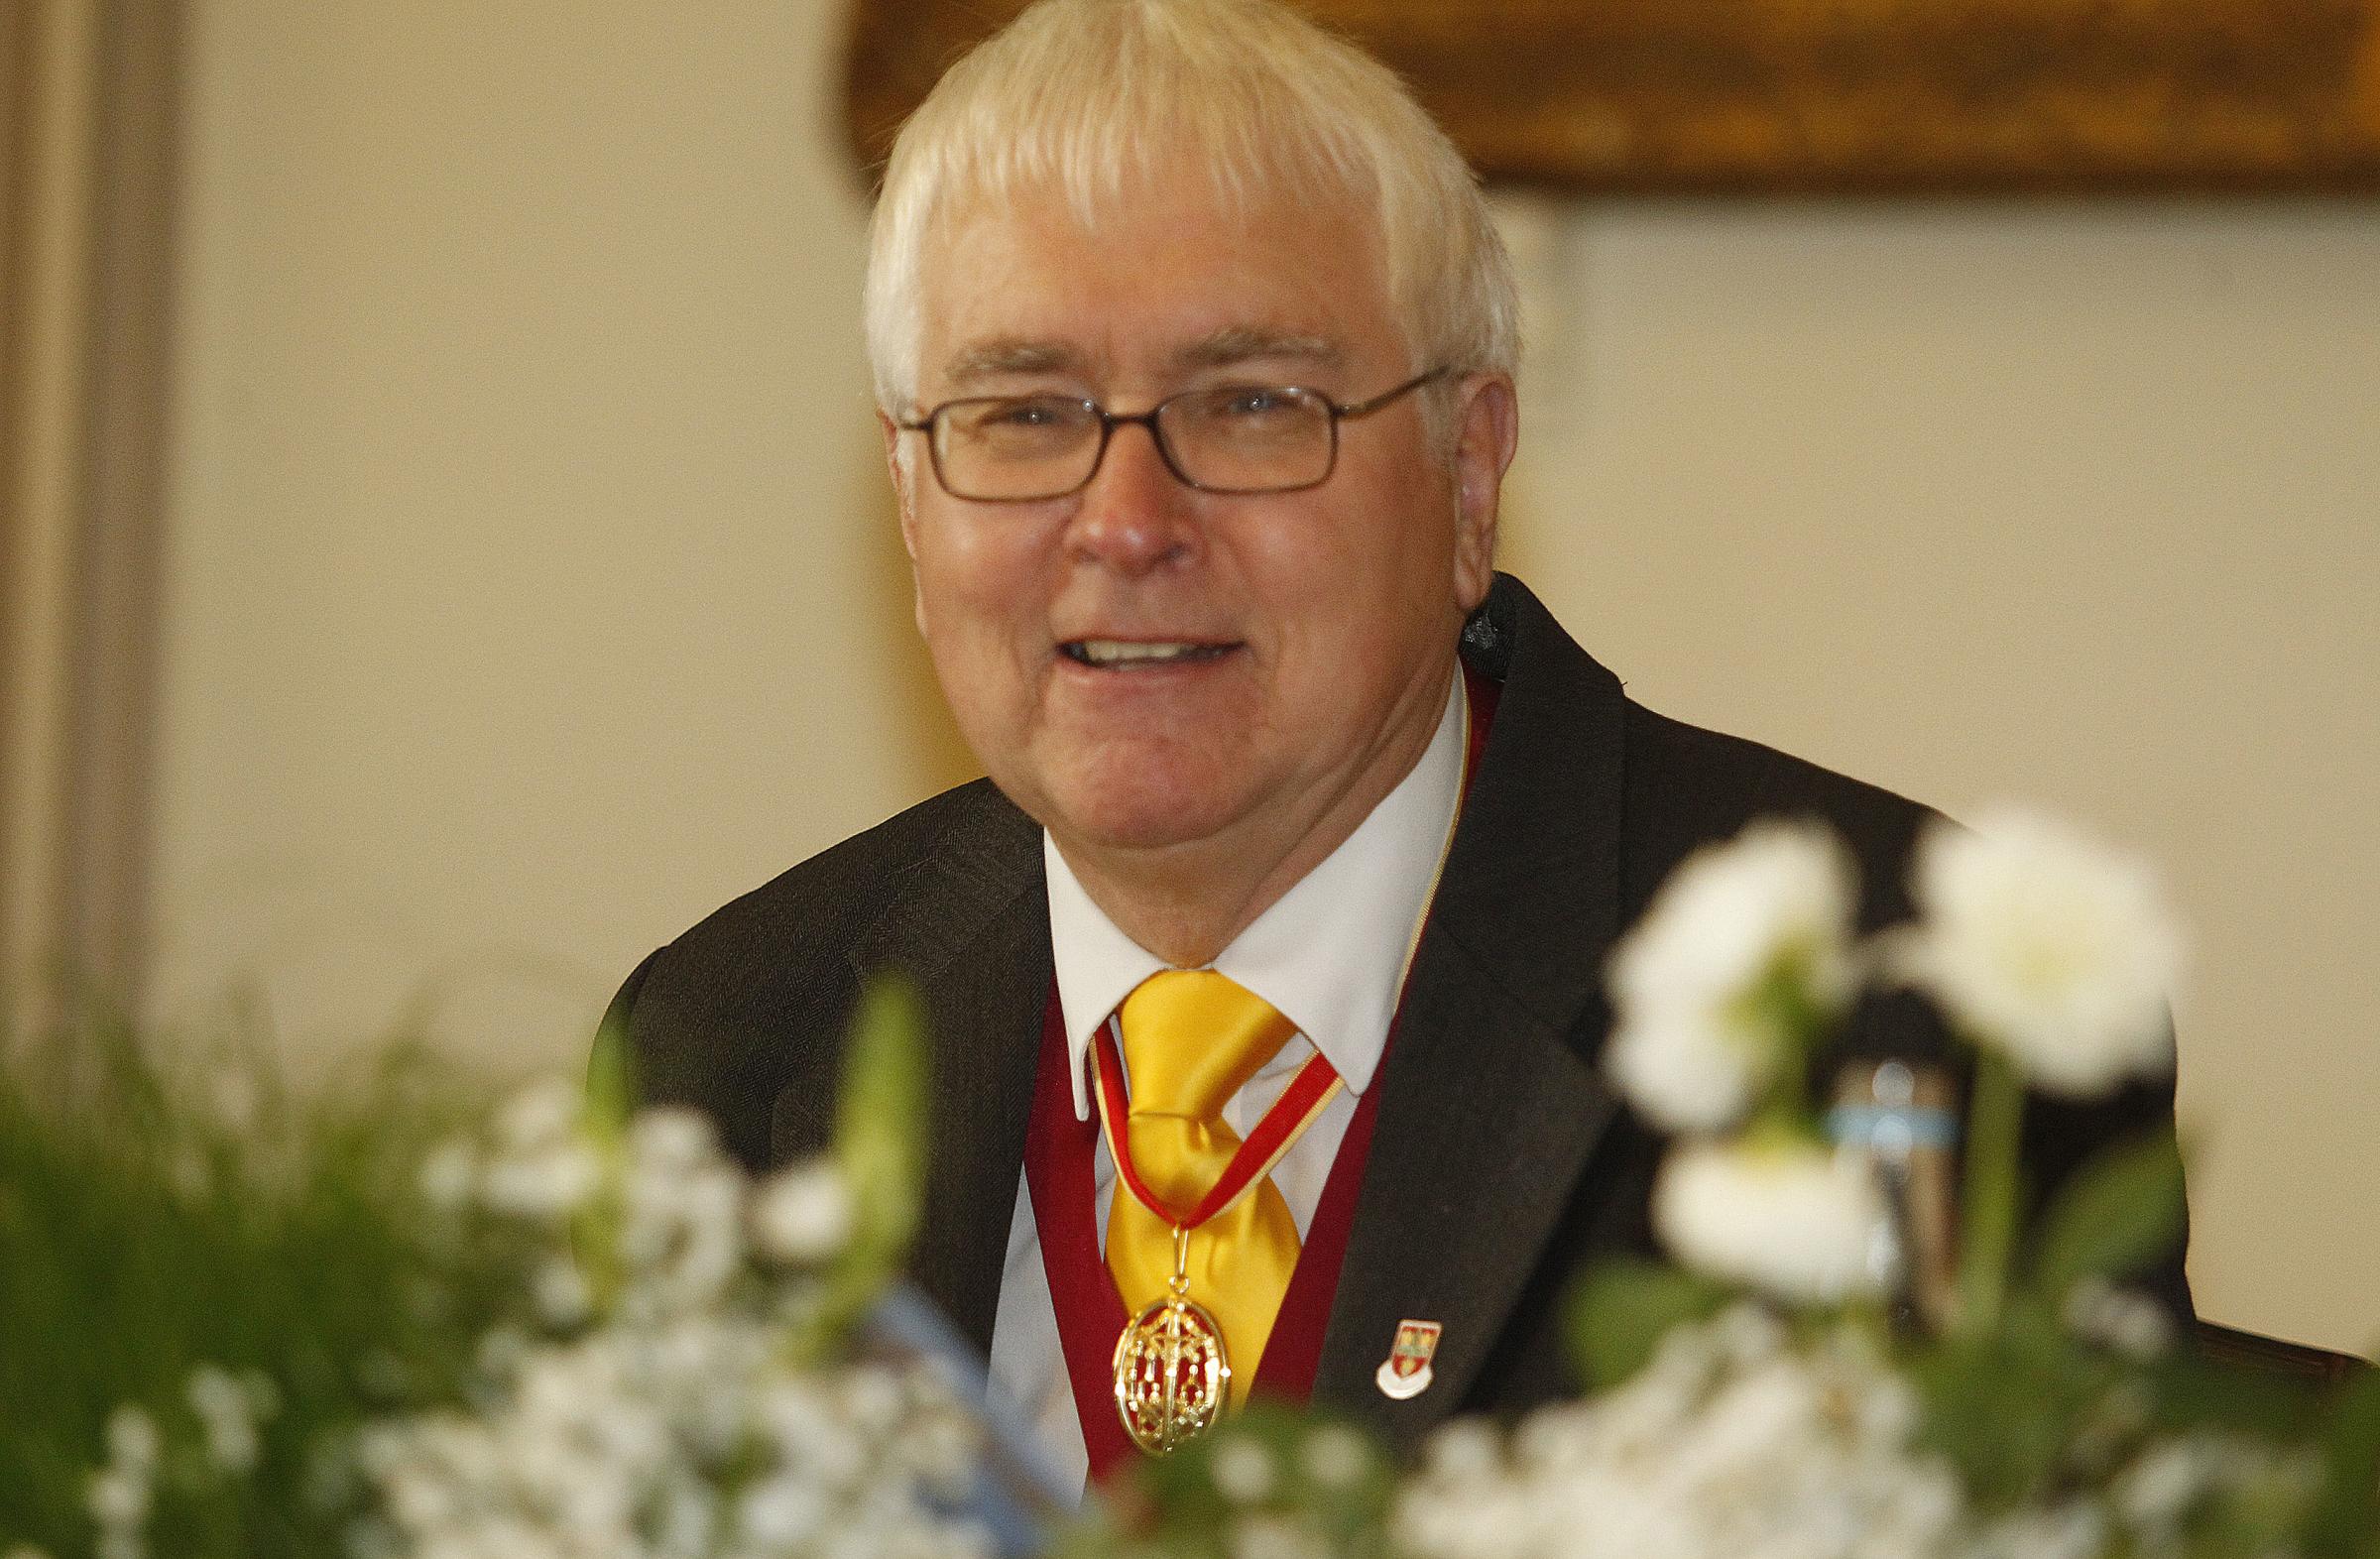 Proud - Gazette columnist Sir Bob Russell was Colchester mayor in 1986-87